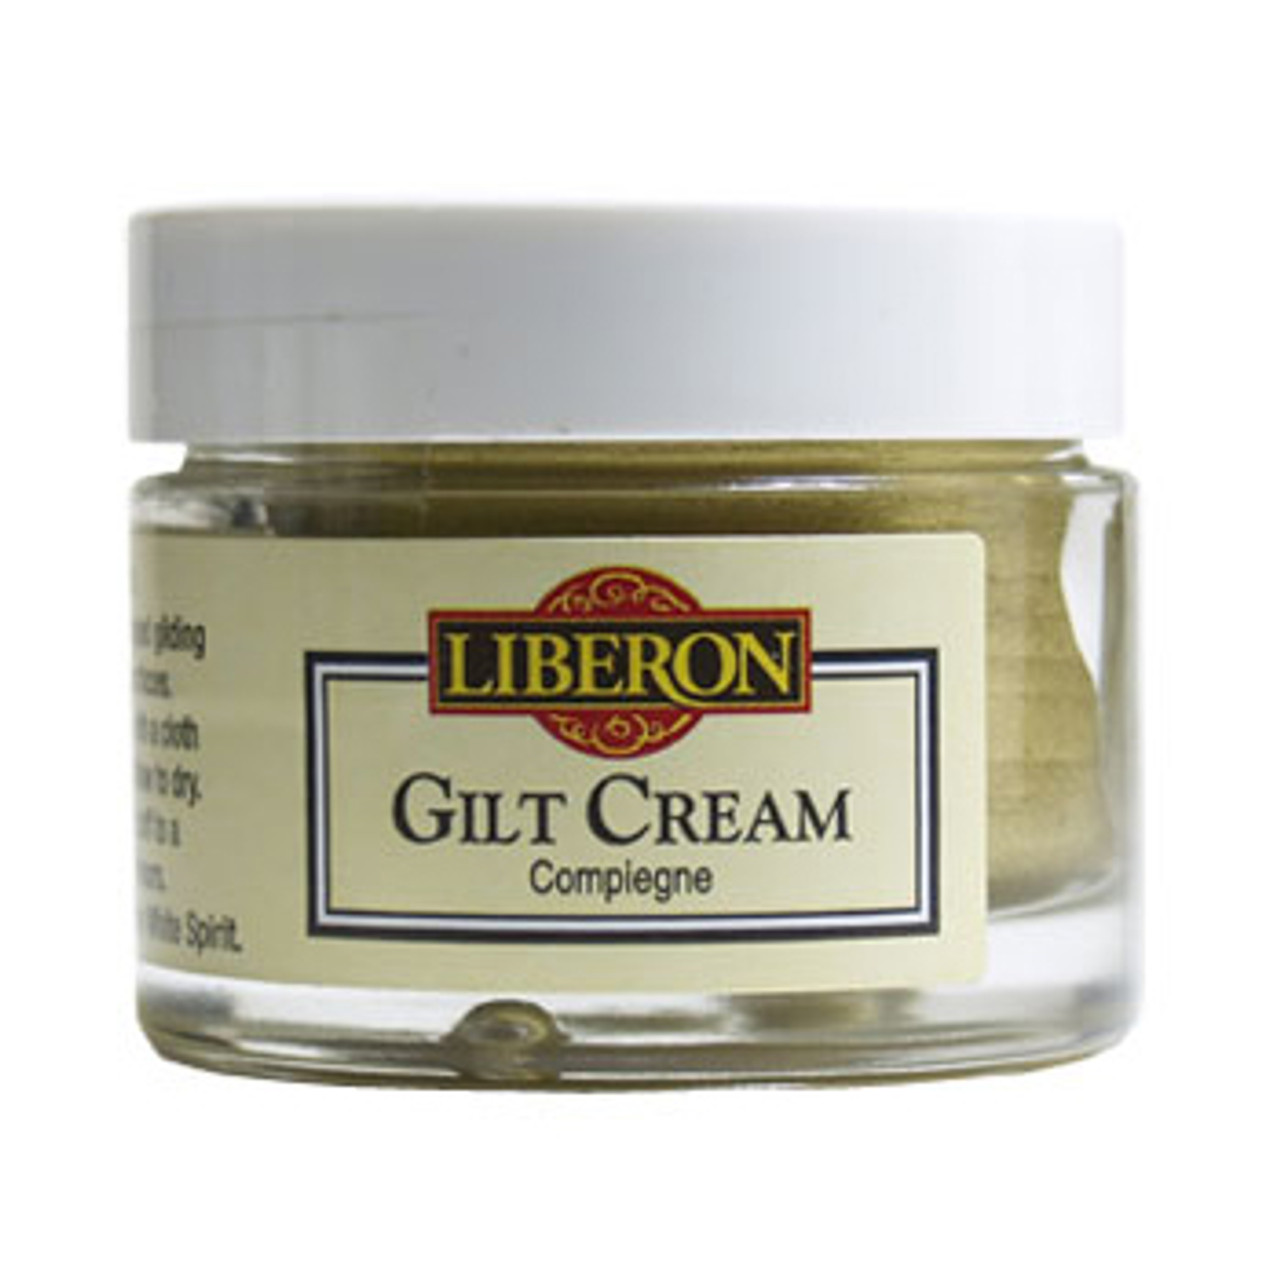 Liberon Gilt Cream Compeigne